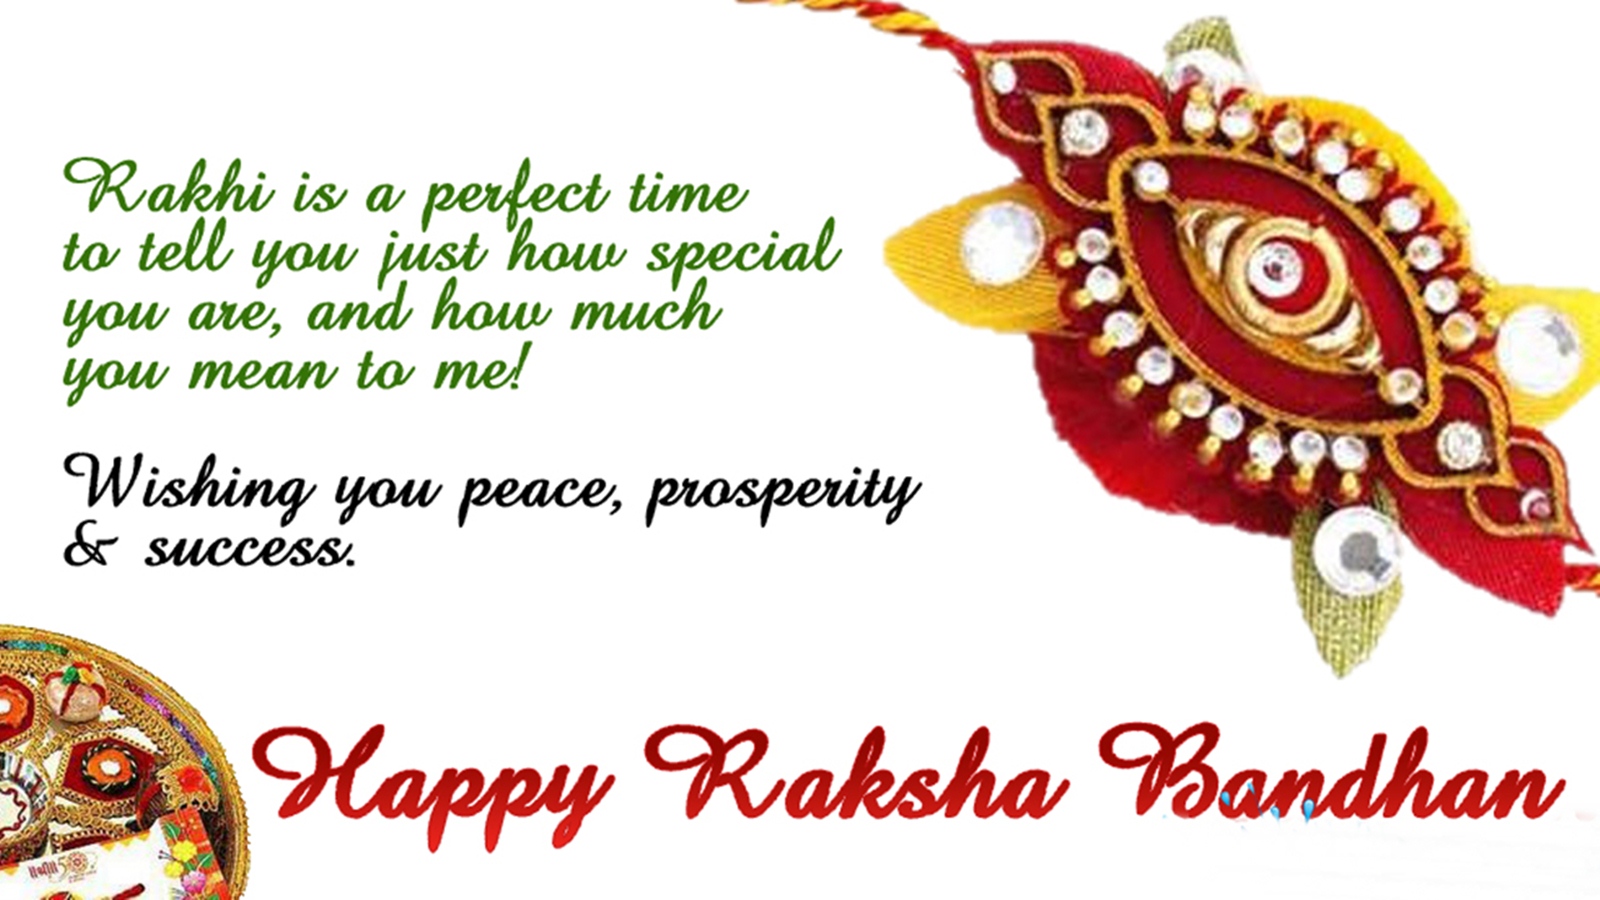 Raksha Bandhan Quotes | Raksha Bandhan - The festival of Love & Warmth